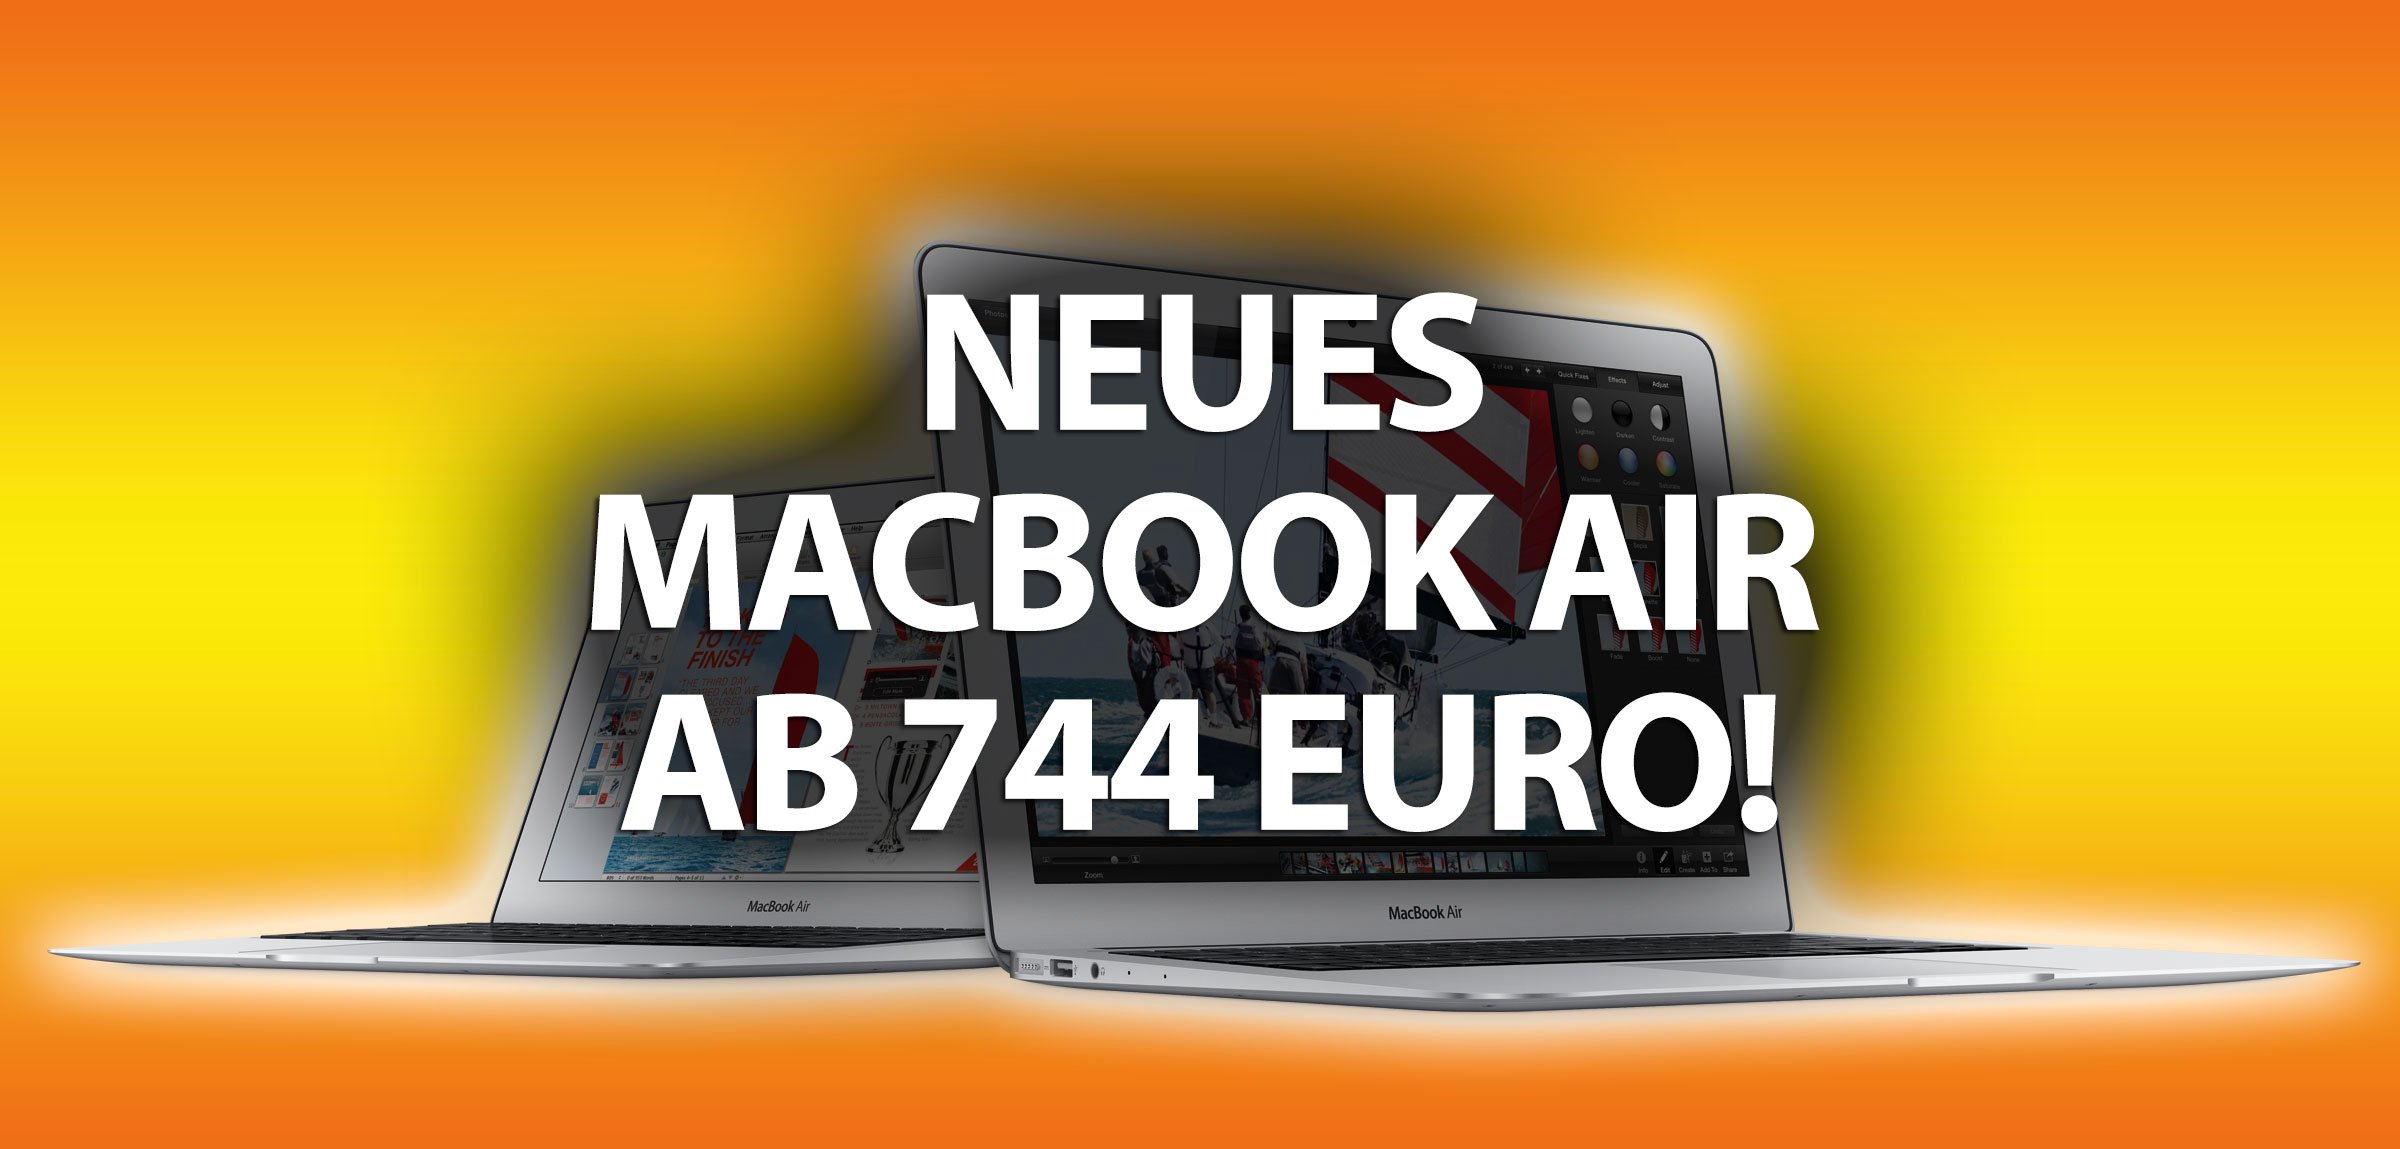 Neuer Rabattcode für Macbook Air 2014: Bester Preis! (Update: Studenten-Rabatt) 8